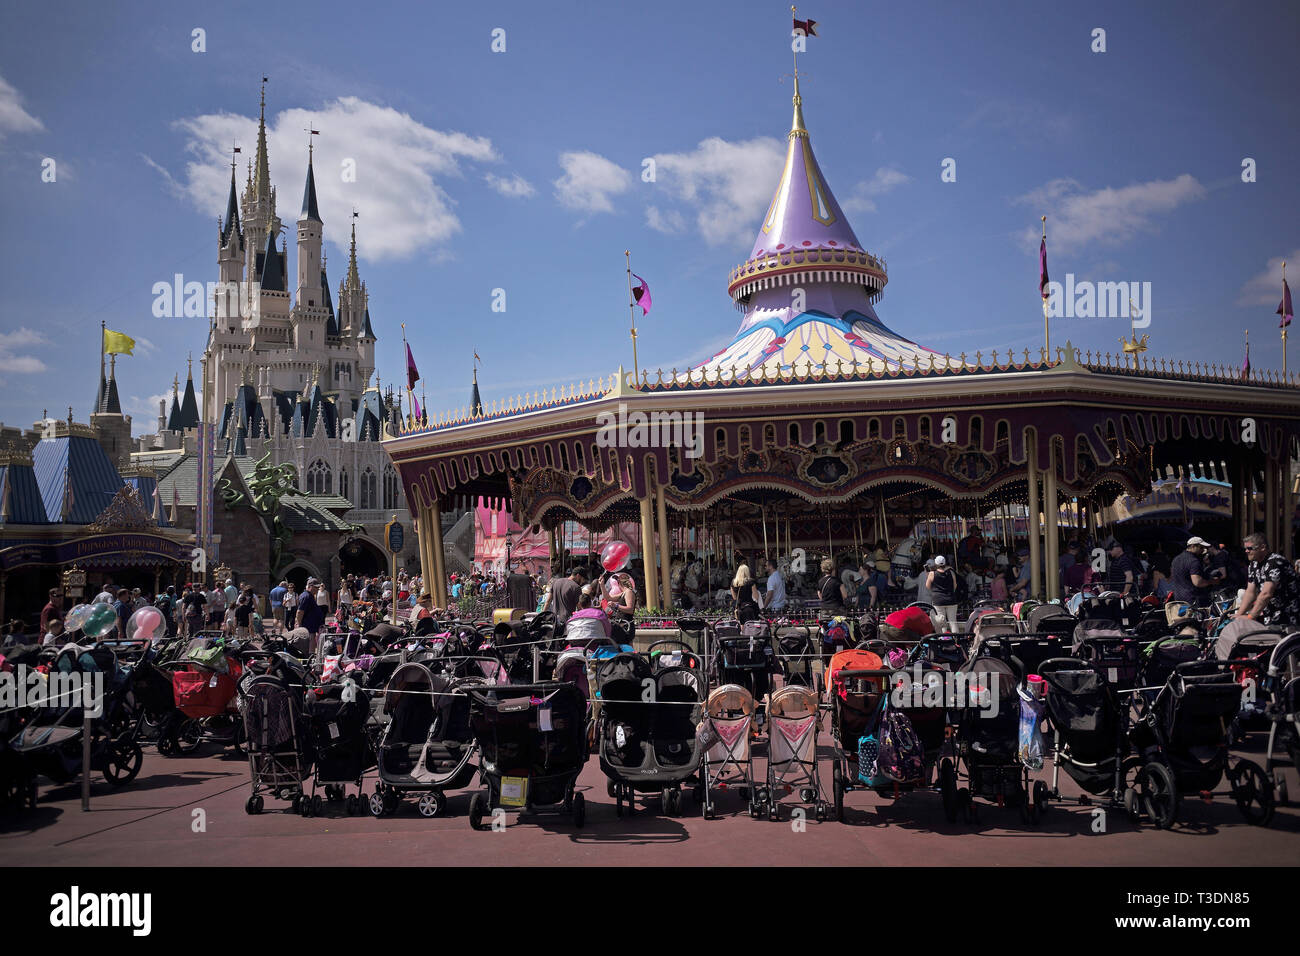 Strollers parked at Fantasyland in Disneyworld. Stock Photo